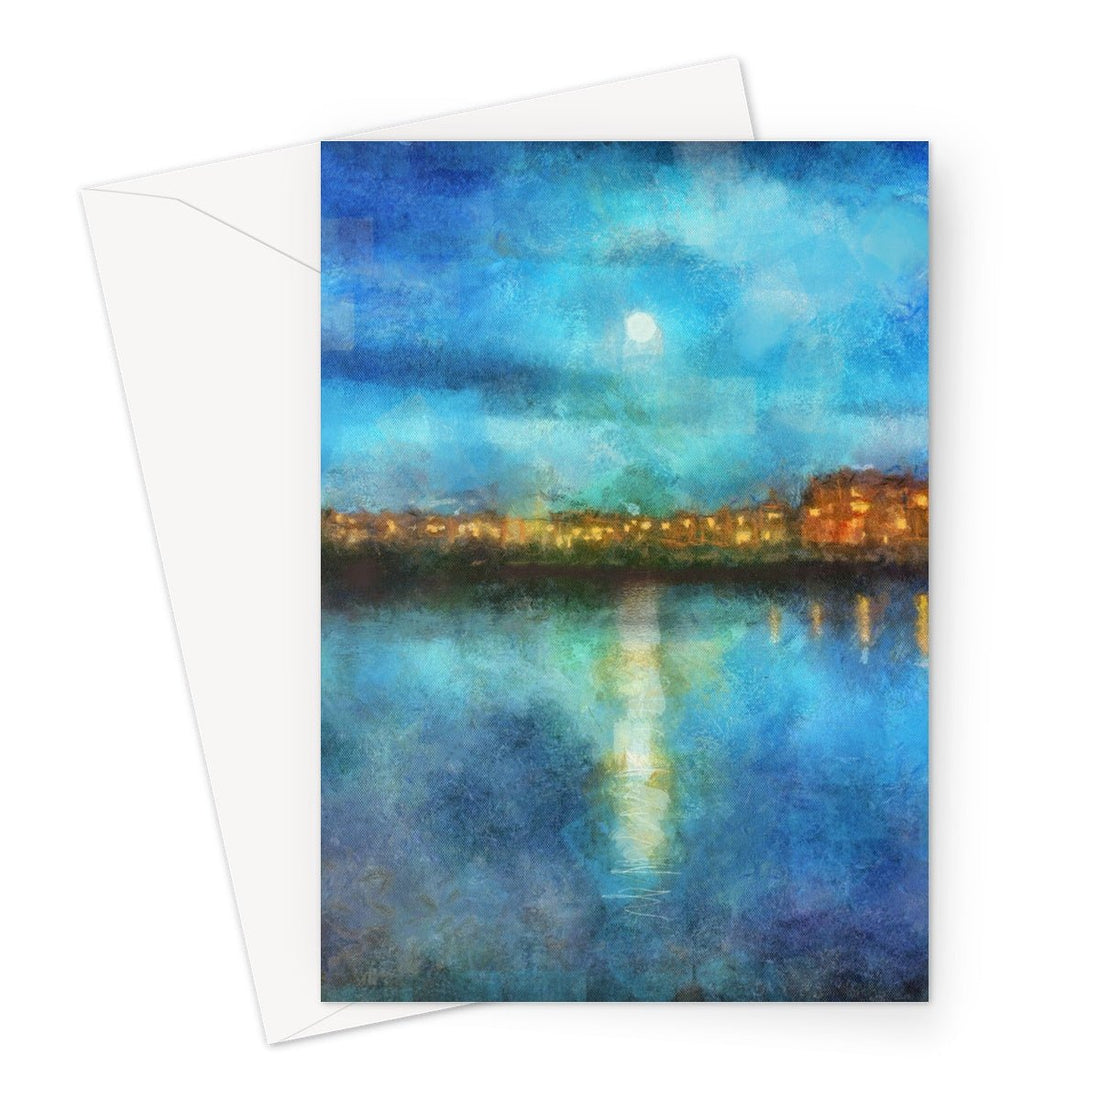 Portobello Moonlight Edinburgh Art Gifts Greeting Card Scotland